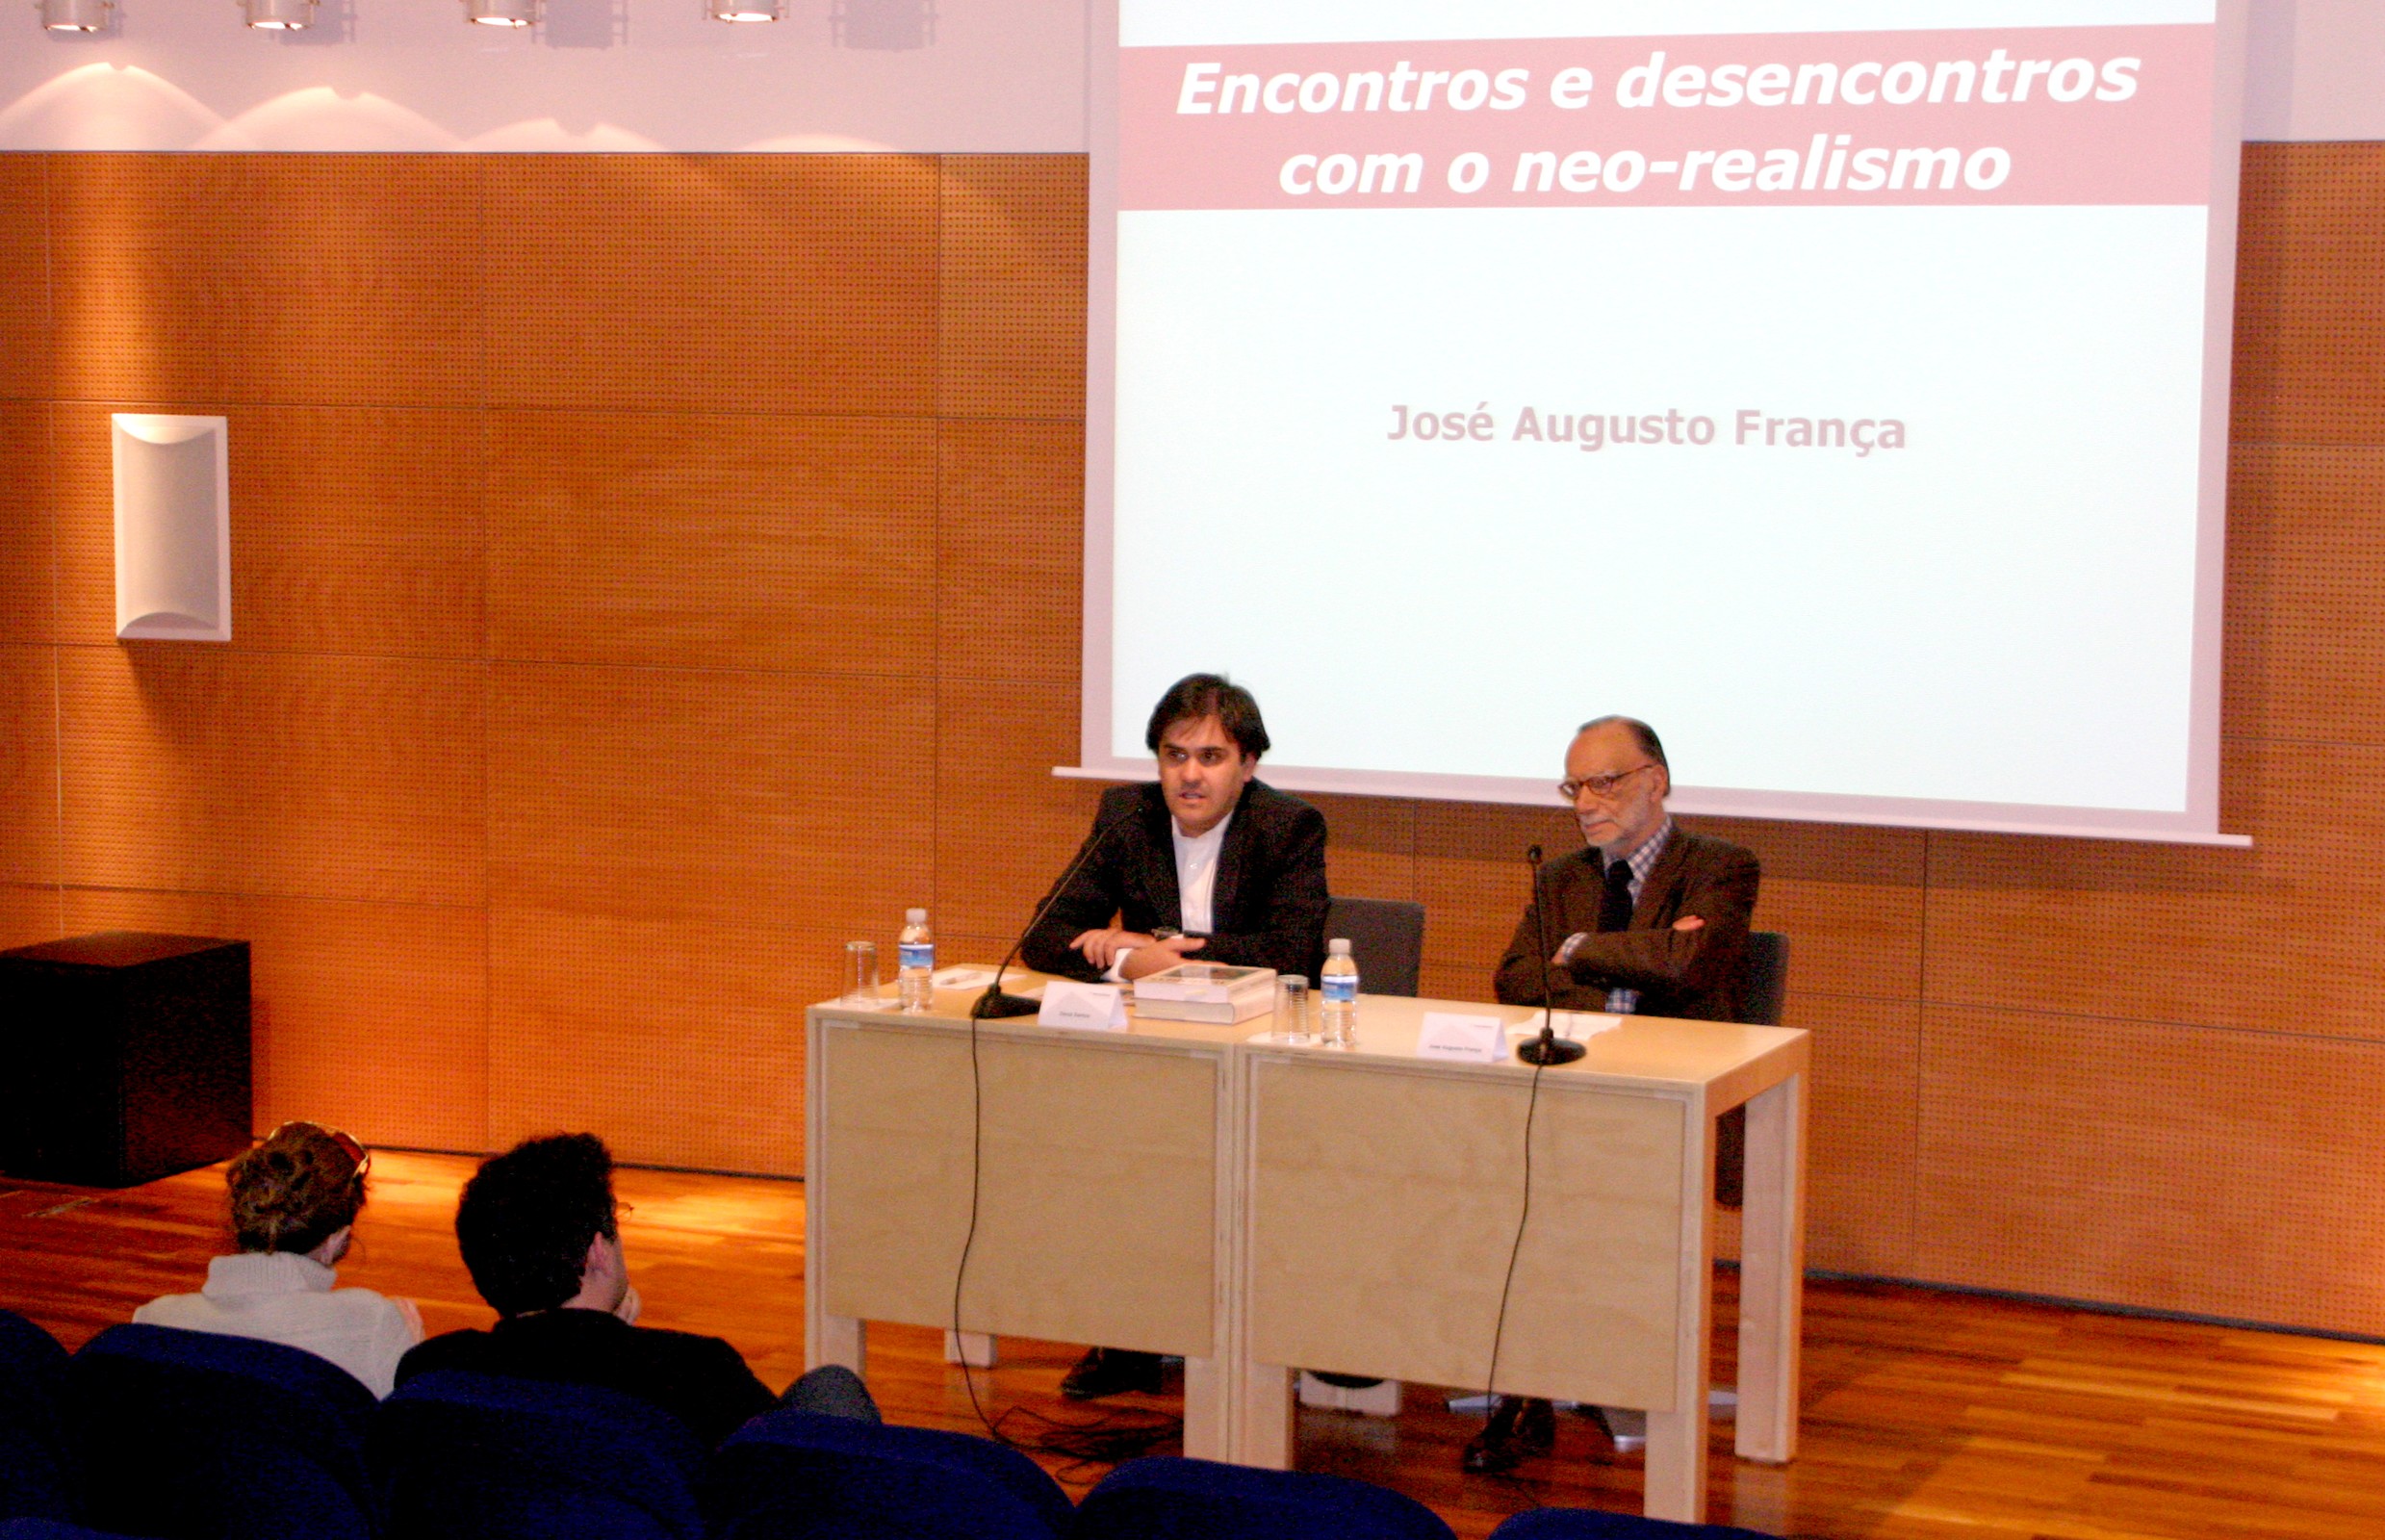 José Augusto França - 29 Mar 2008 (1)